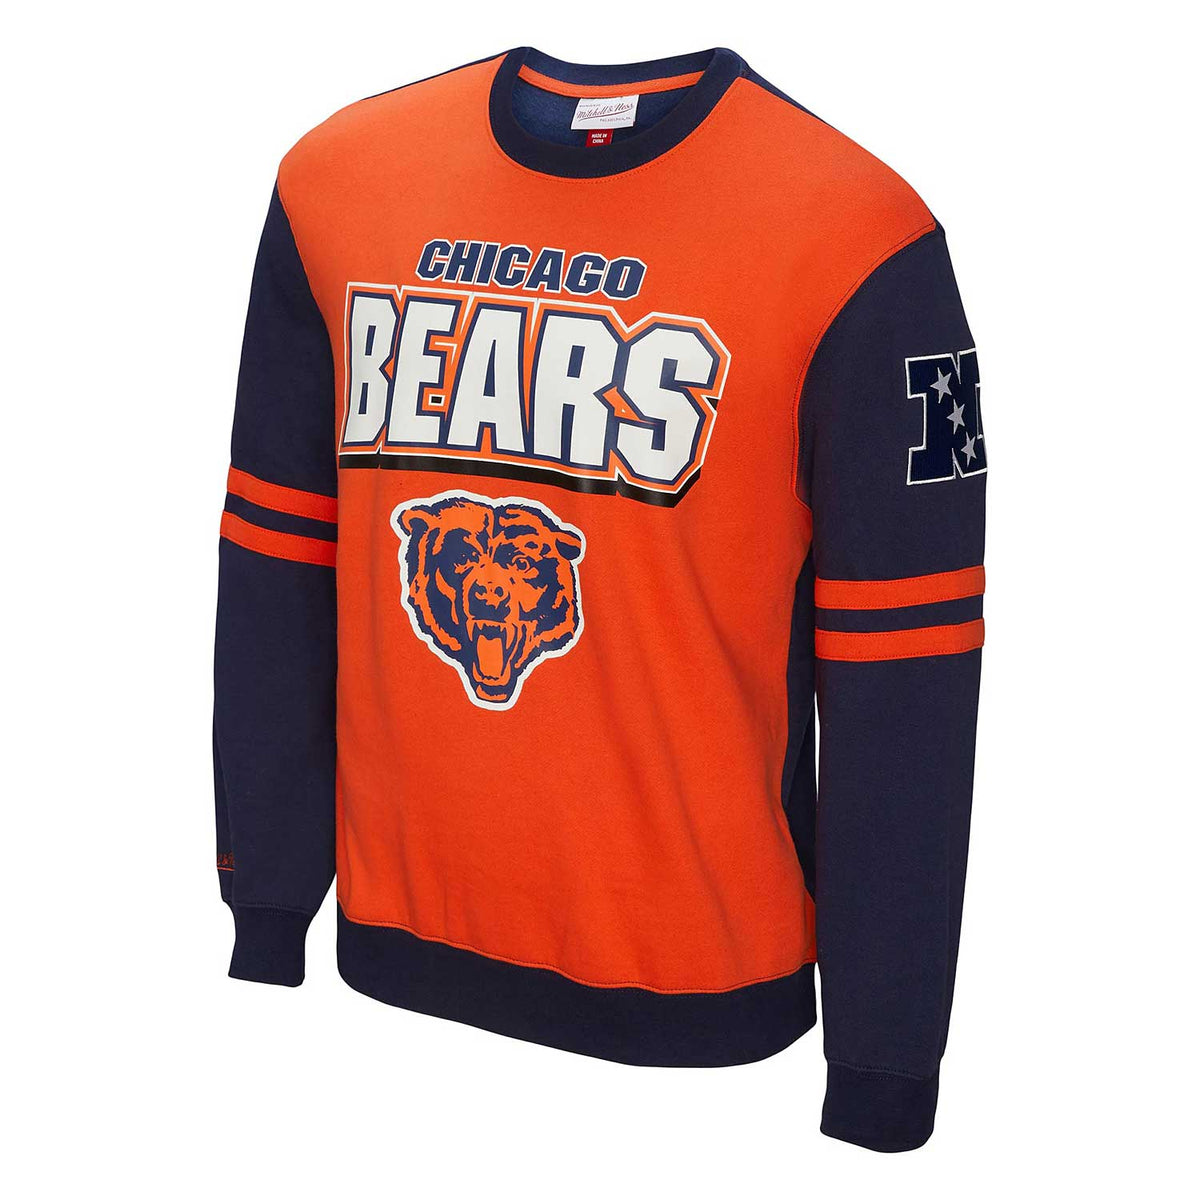 5x chicago bears jersey